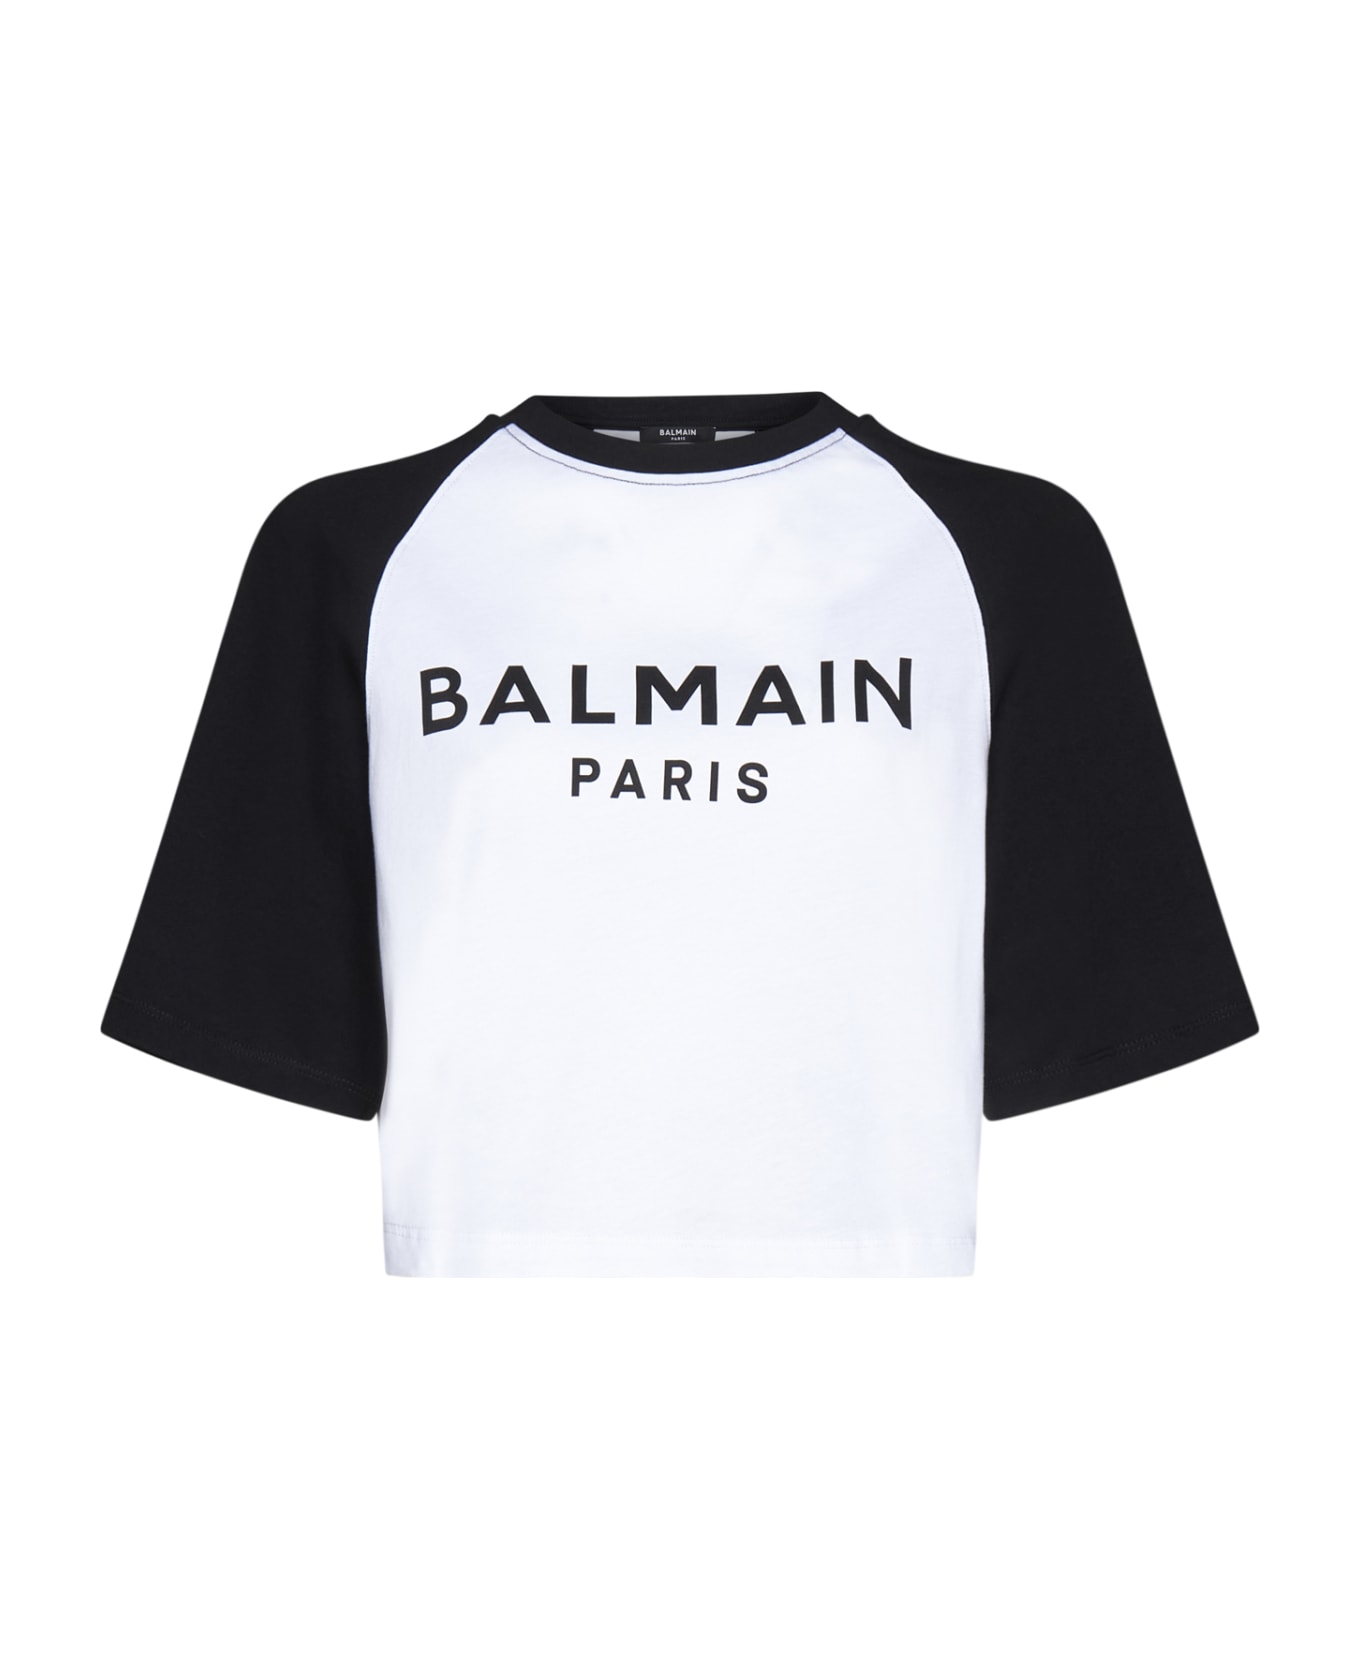 Balmain Printed Raglan Cropped T-shirt - Blanc/noir